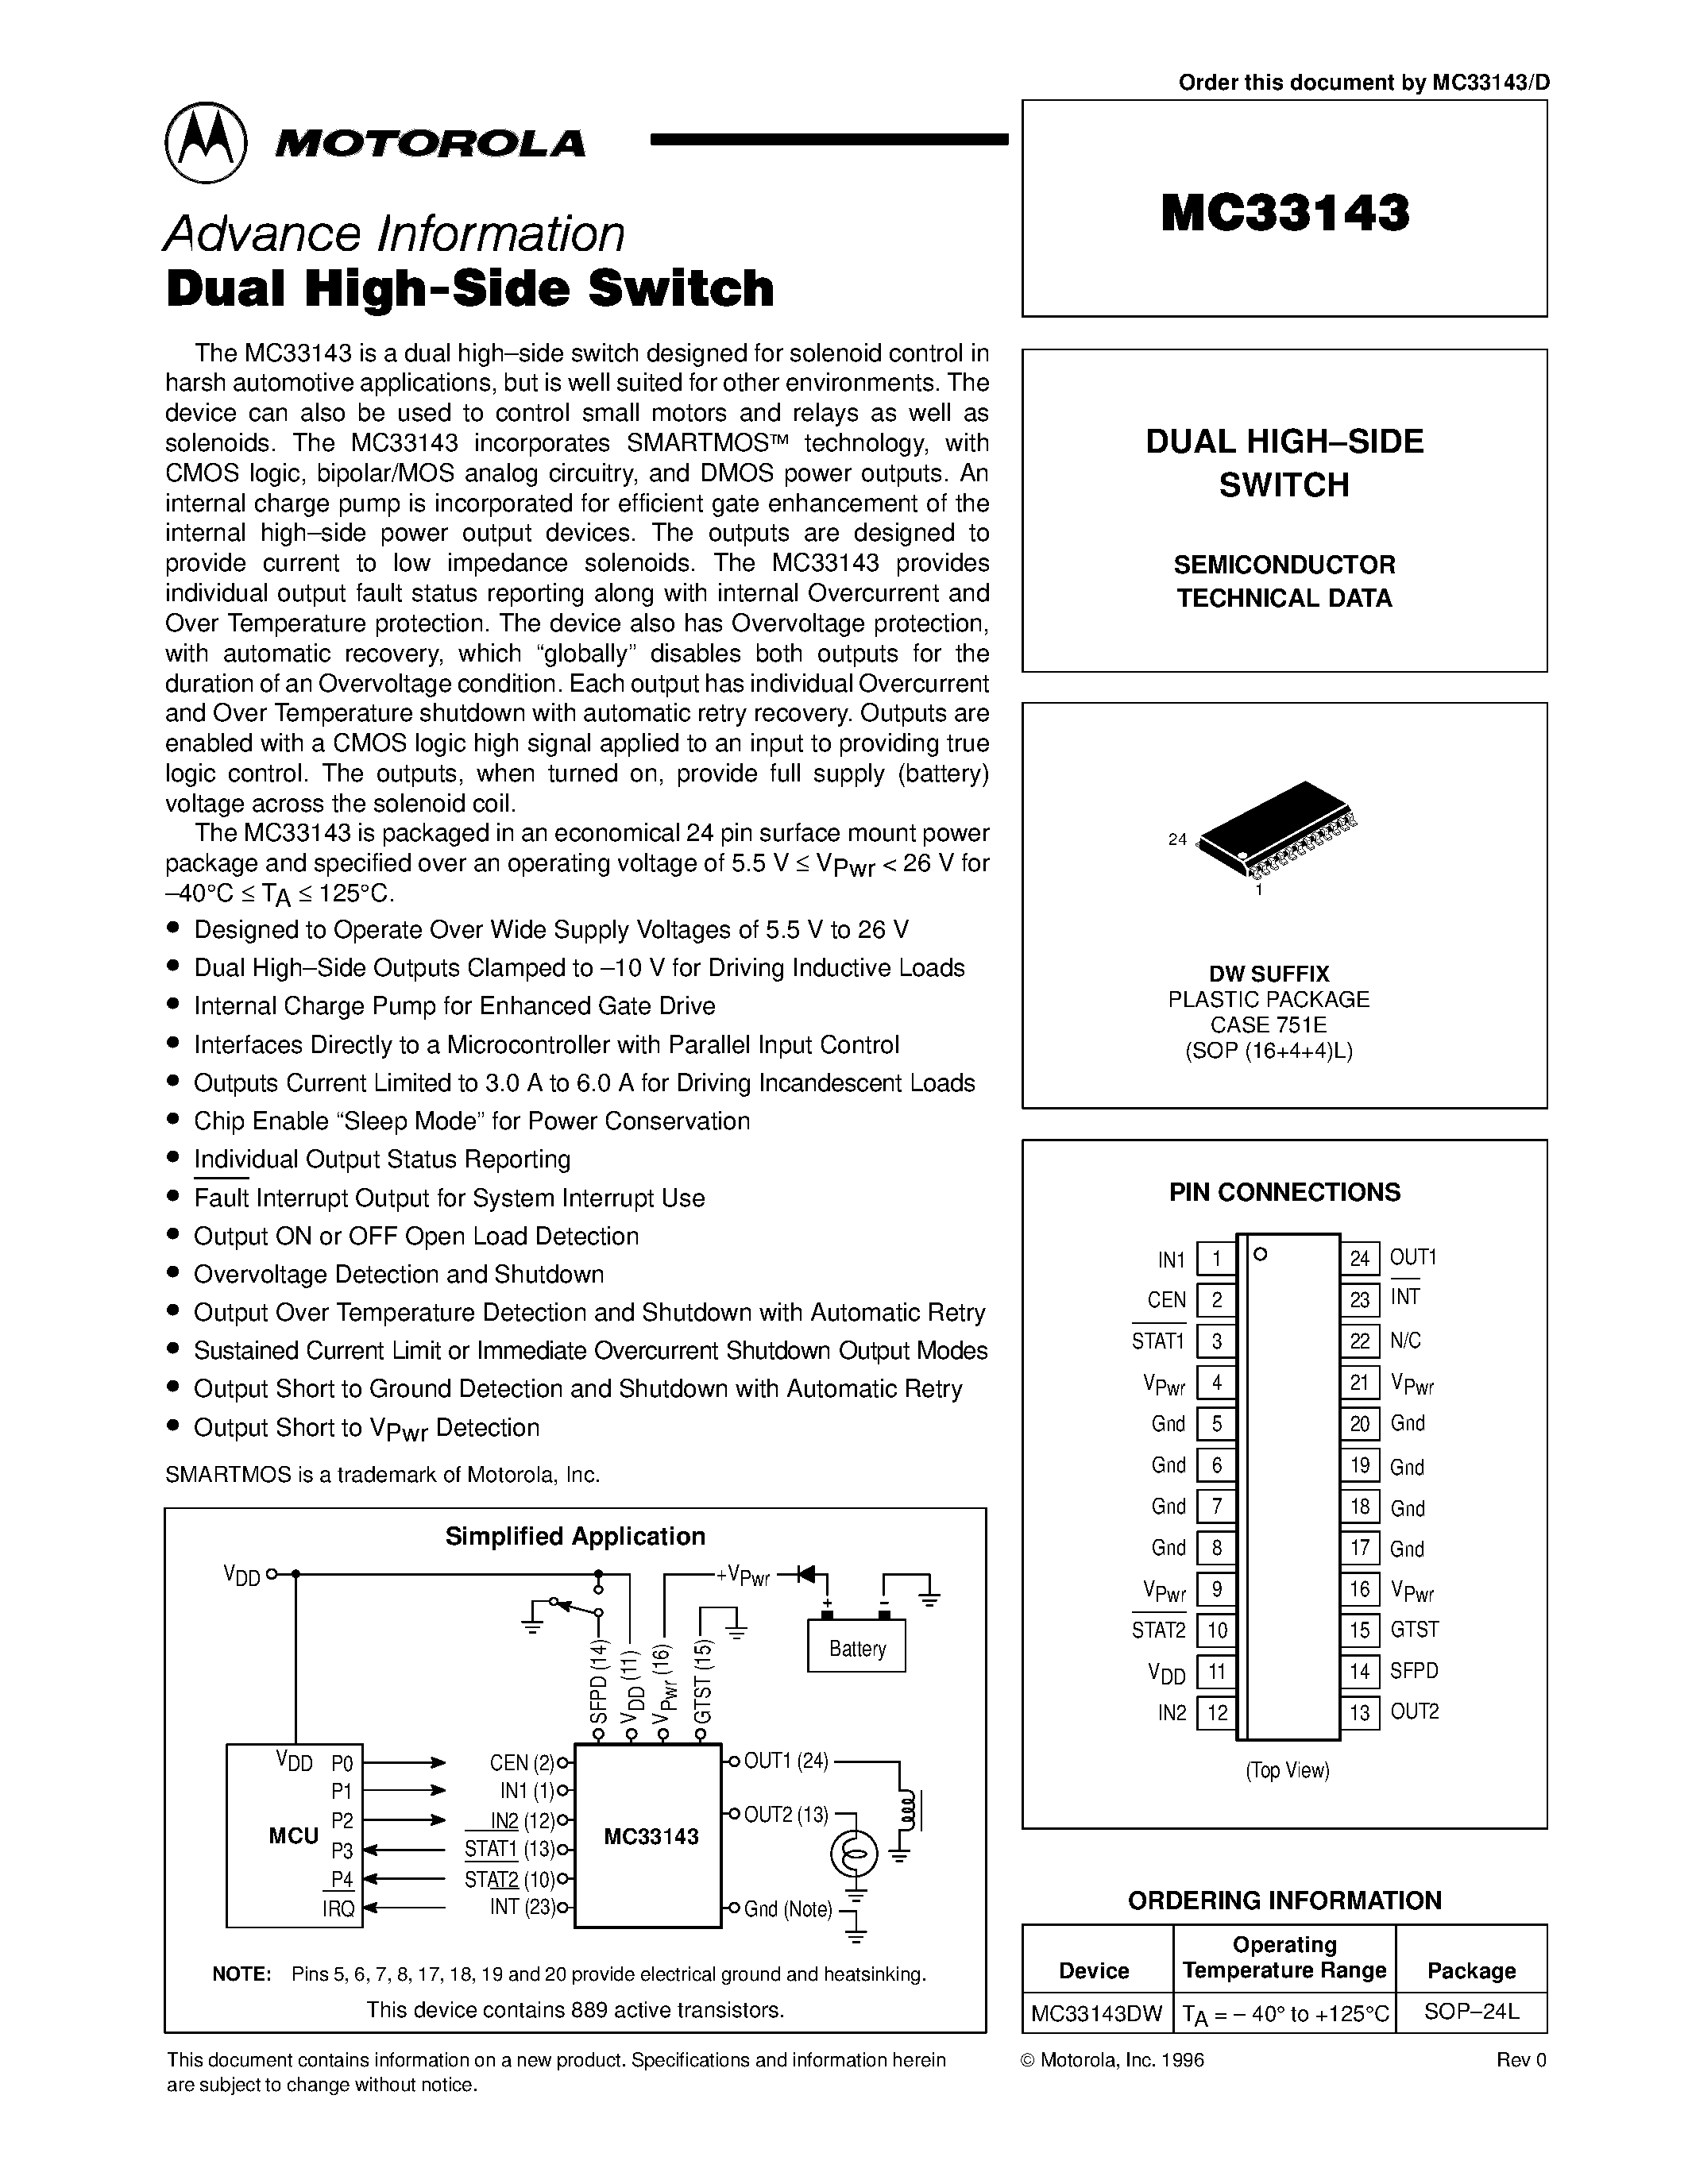 Datasheet MC33143 - DUAL HIGH-SIDE SWITCH page 1